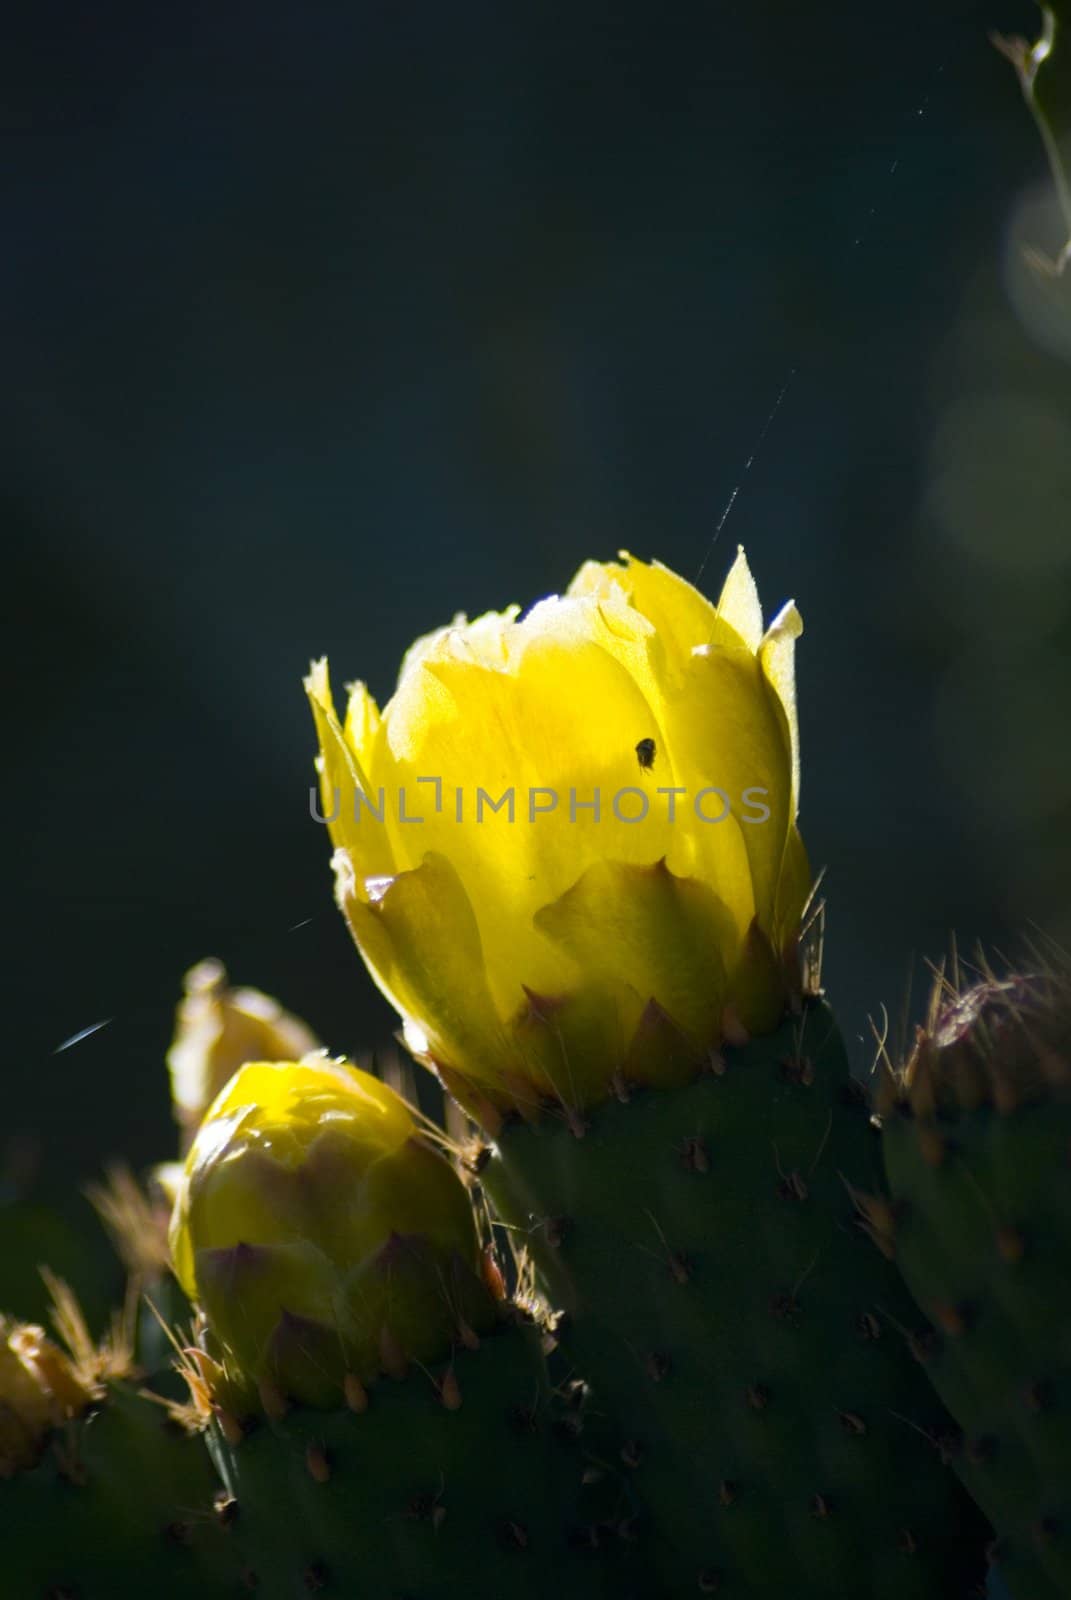 Prickly Pear cactus in bloom,Silifke,Mersin,Turkey